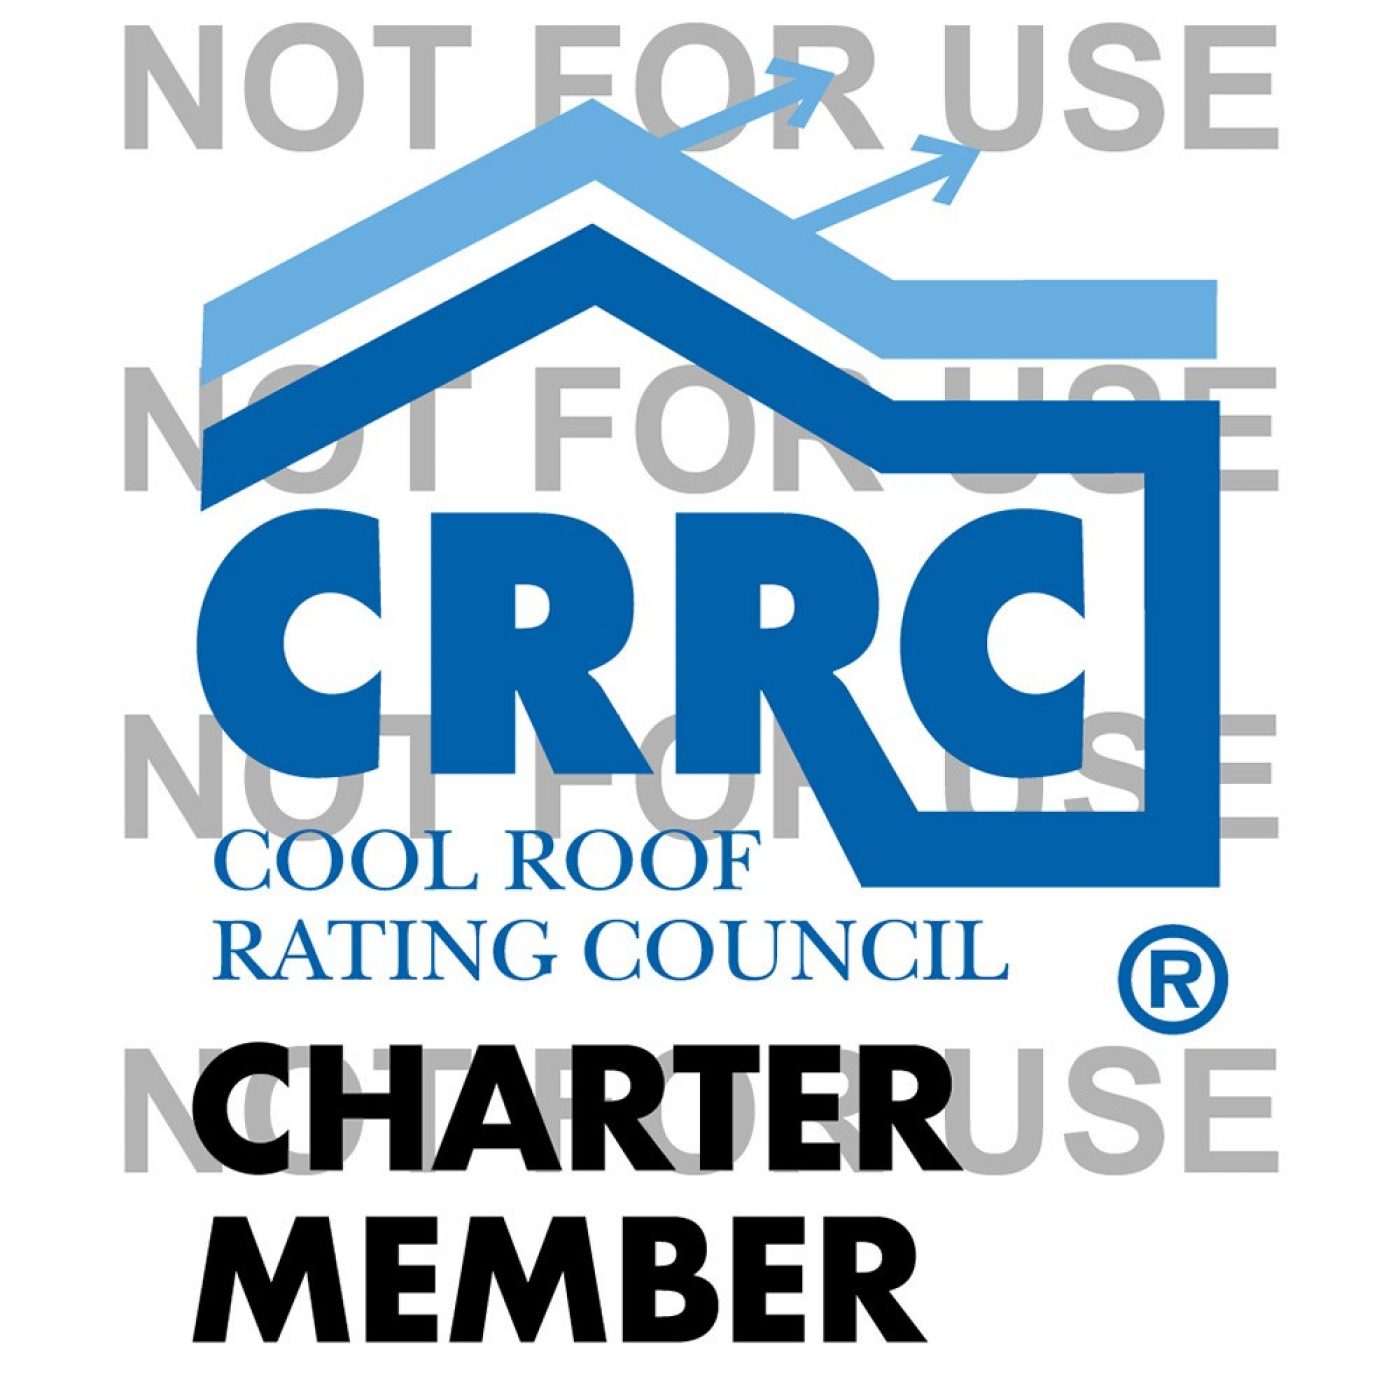 CRRC charter member